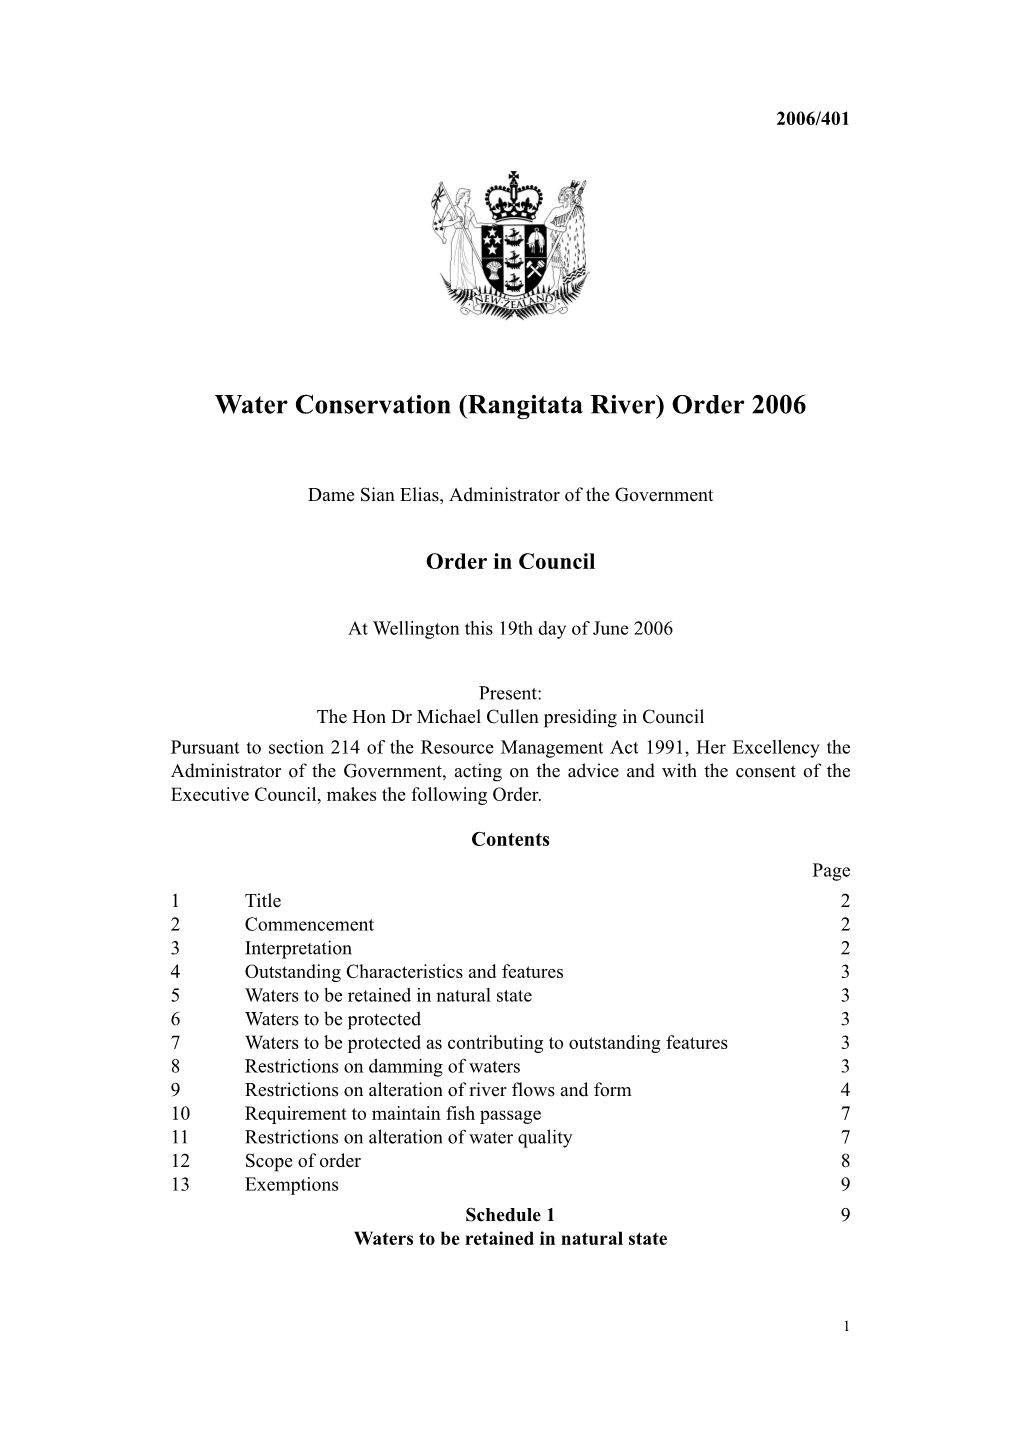 Water Conservation (Rangitata River) Order 2006